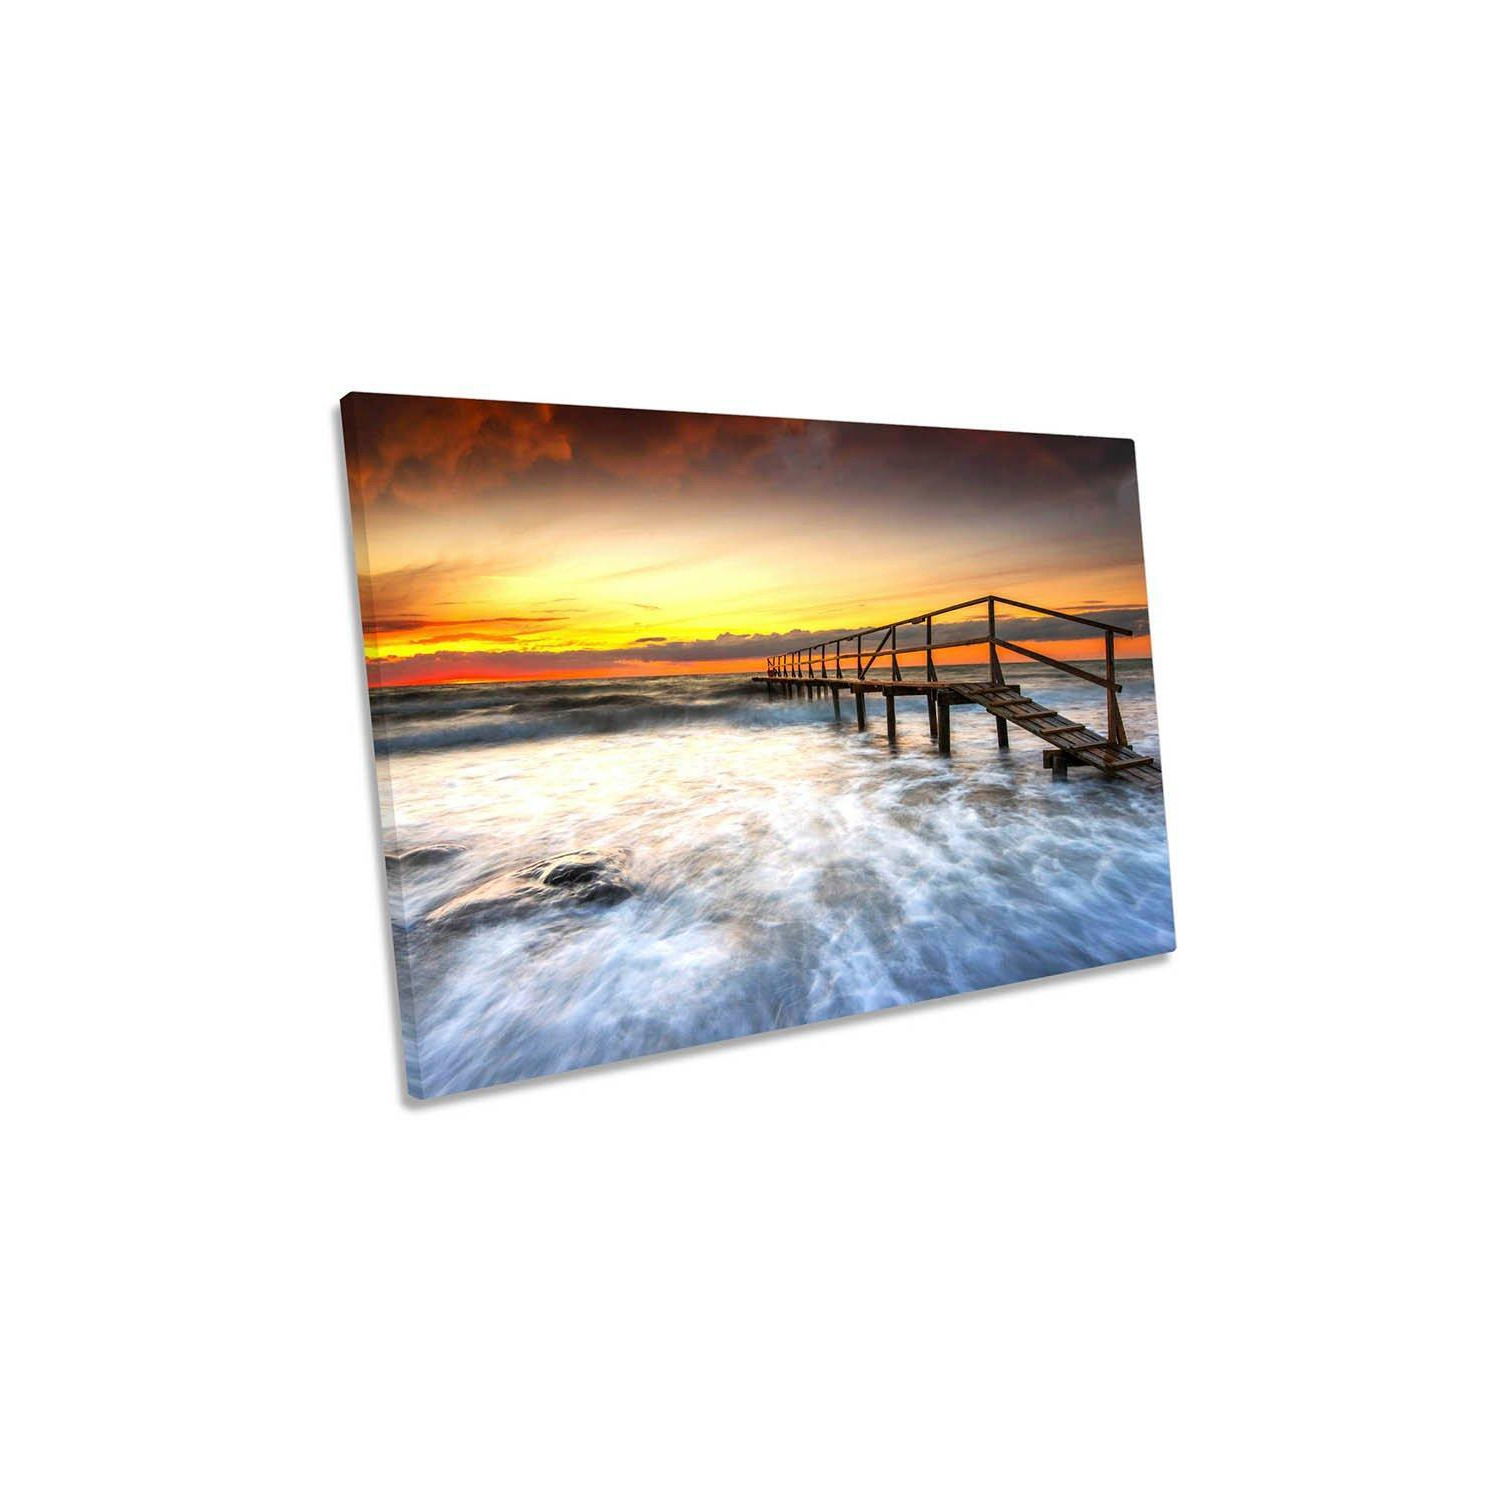 Sunset Pier Orange Seascape Beach Canvas Wall Art Picture Print - image 1